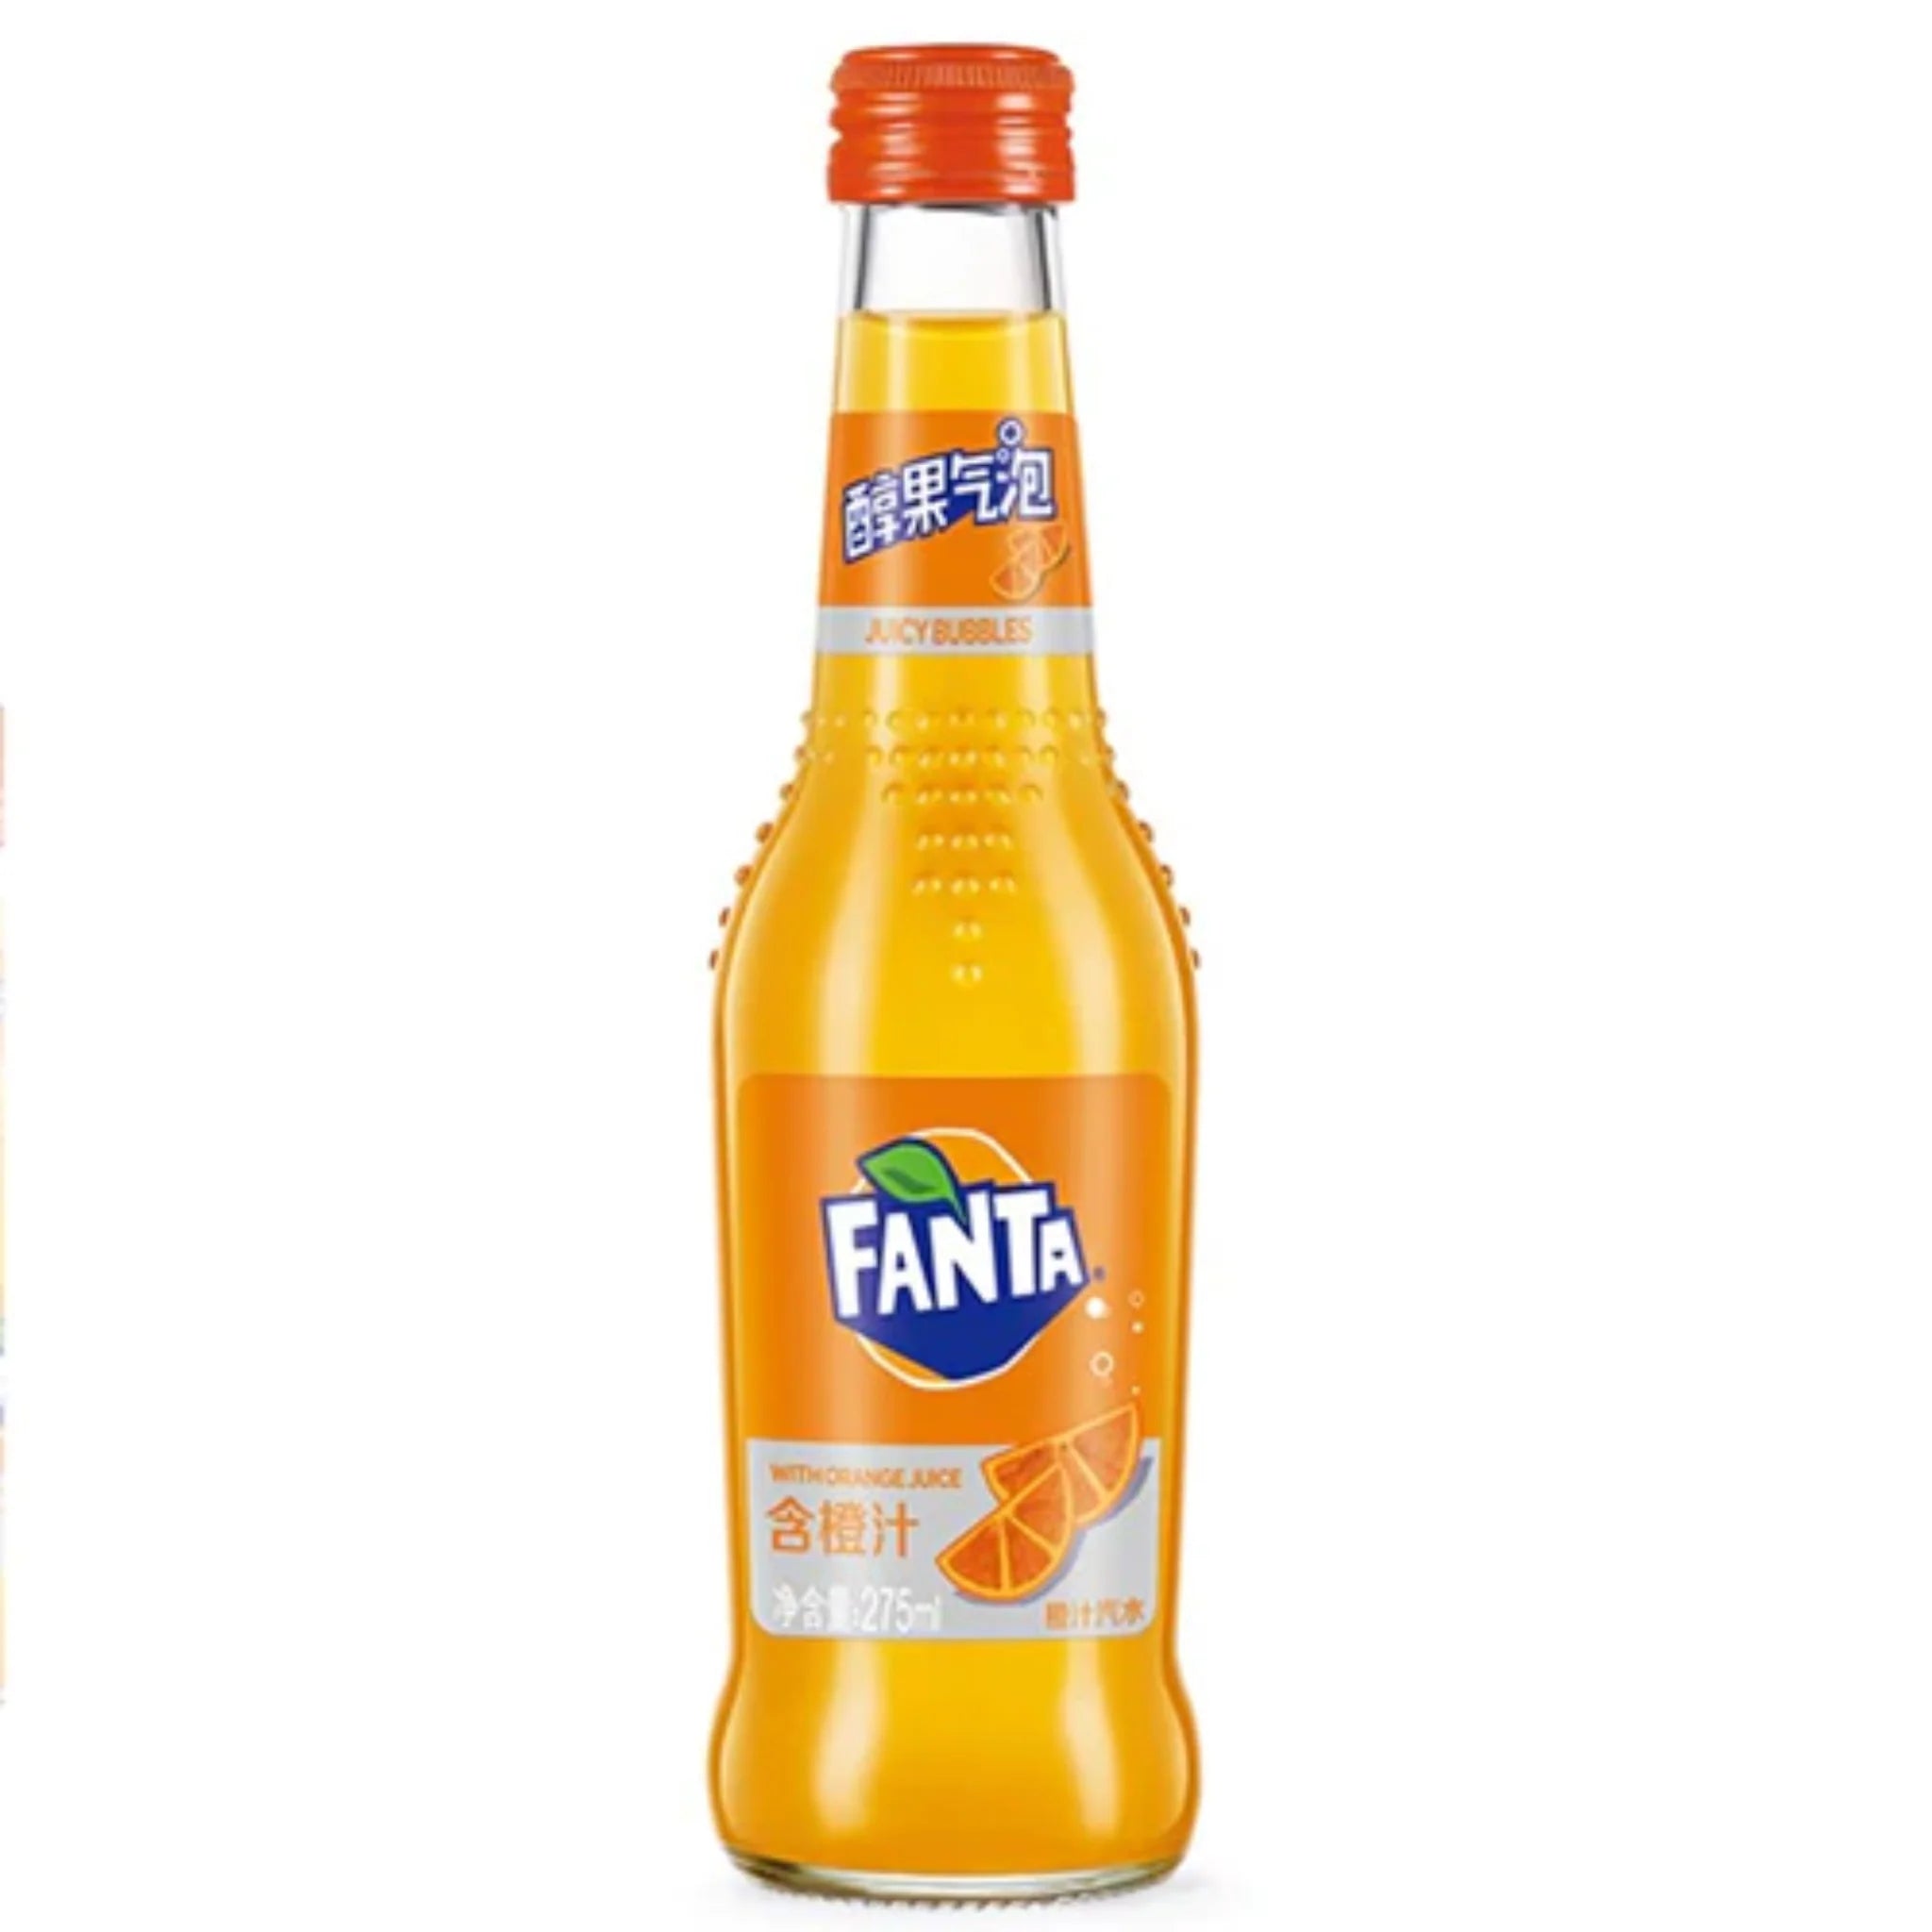 Fanta Orange Glass - 275ml